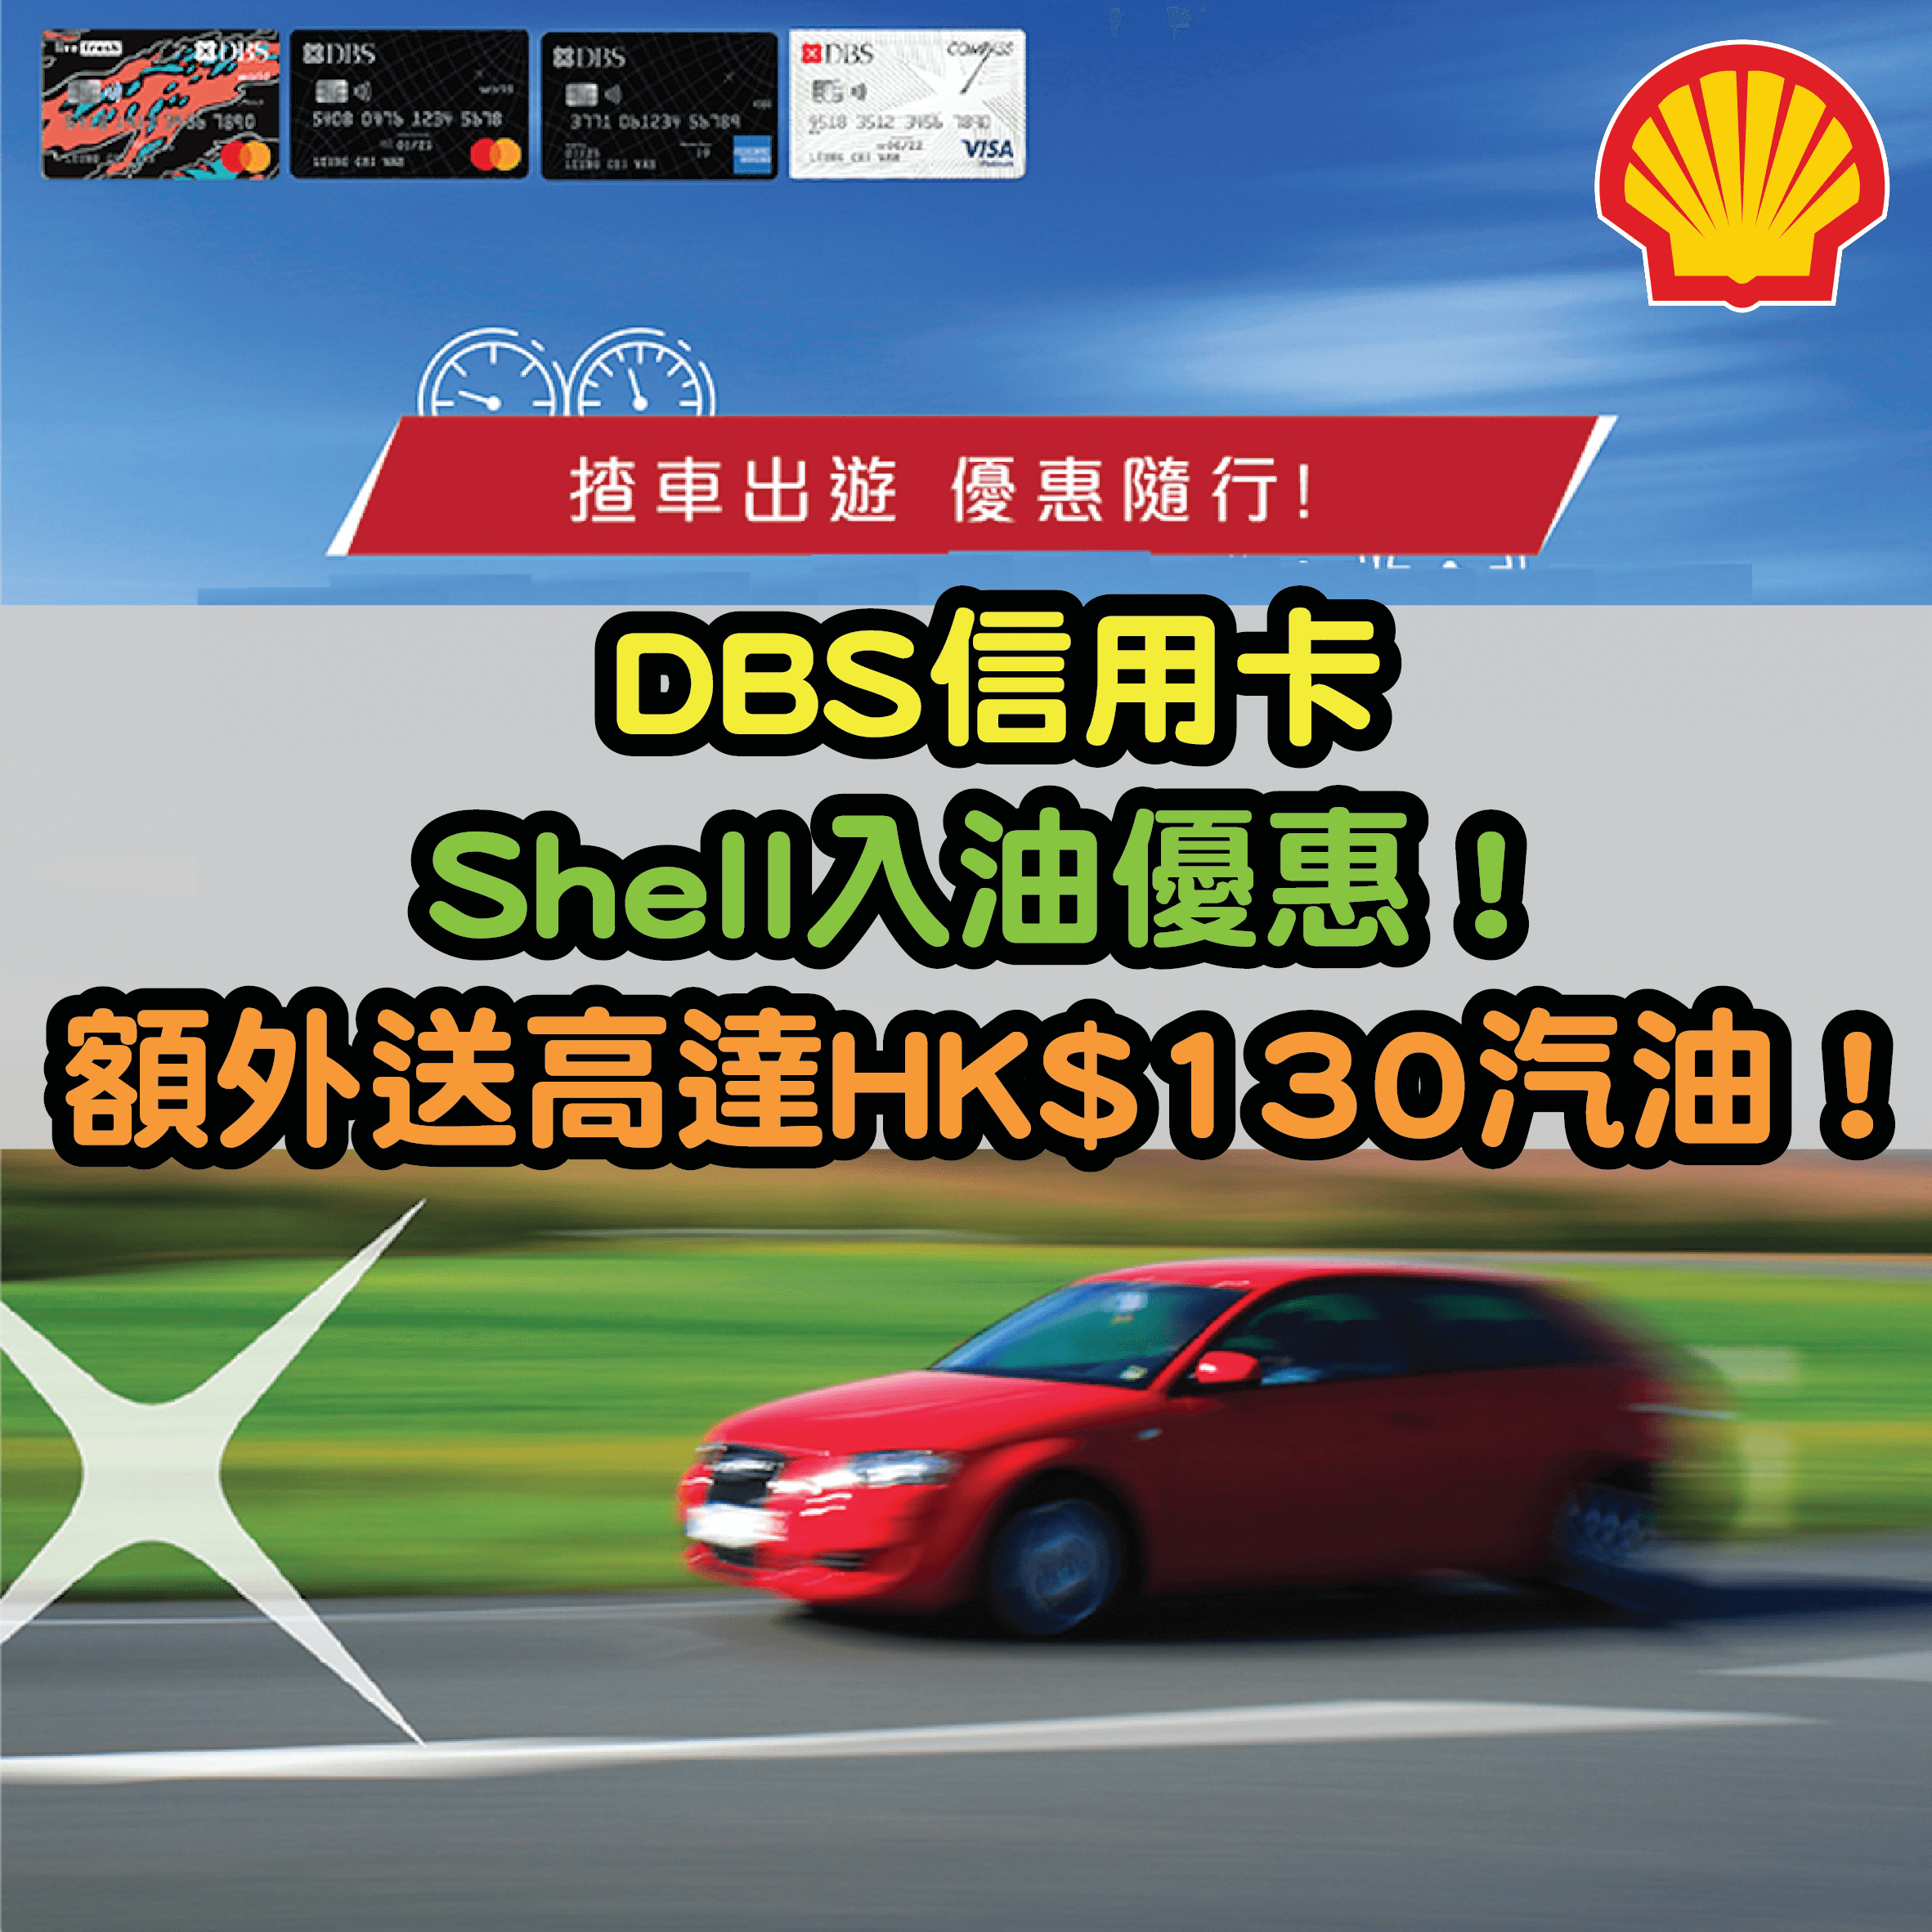 DBS信用卡 Shell 入油優惠！額外送高達HK$130汽油！